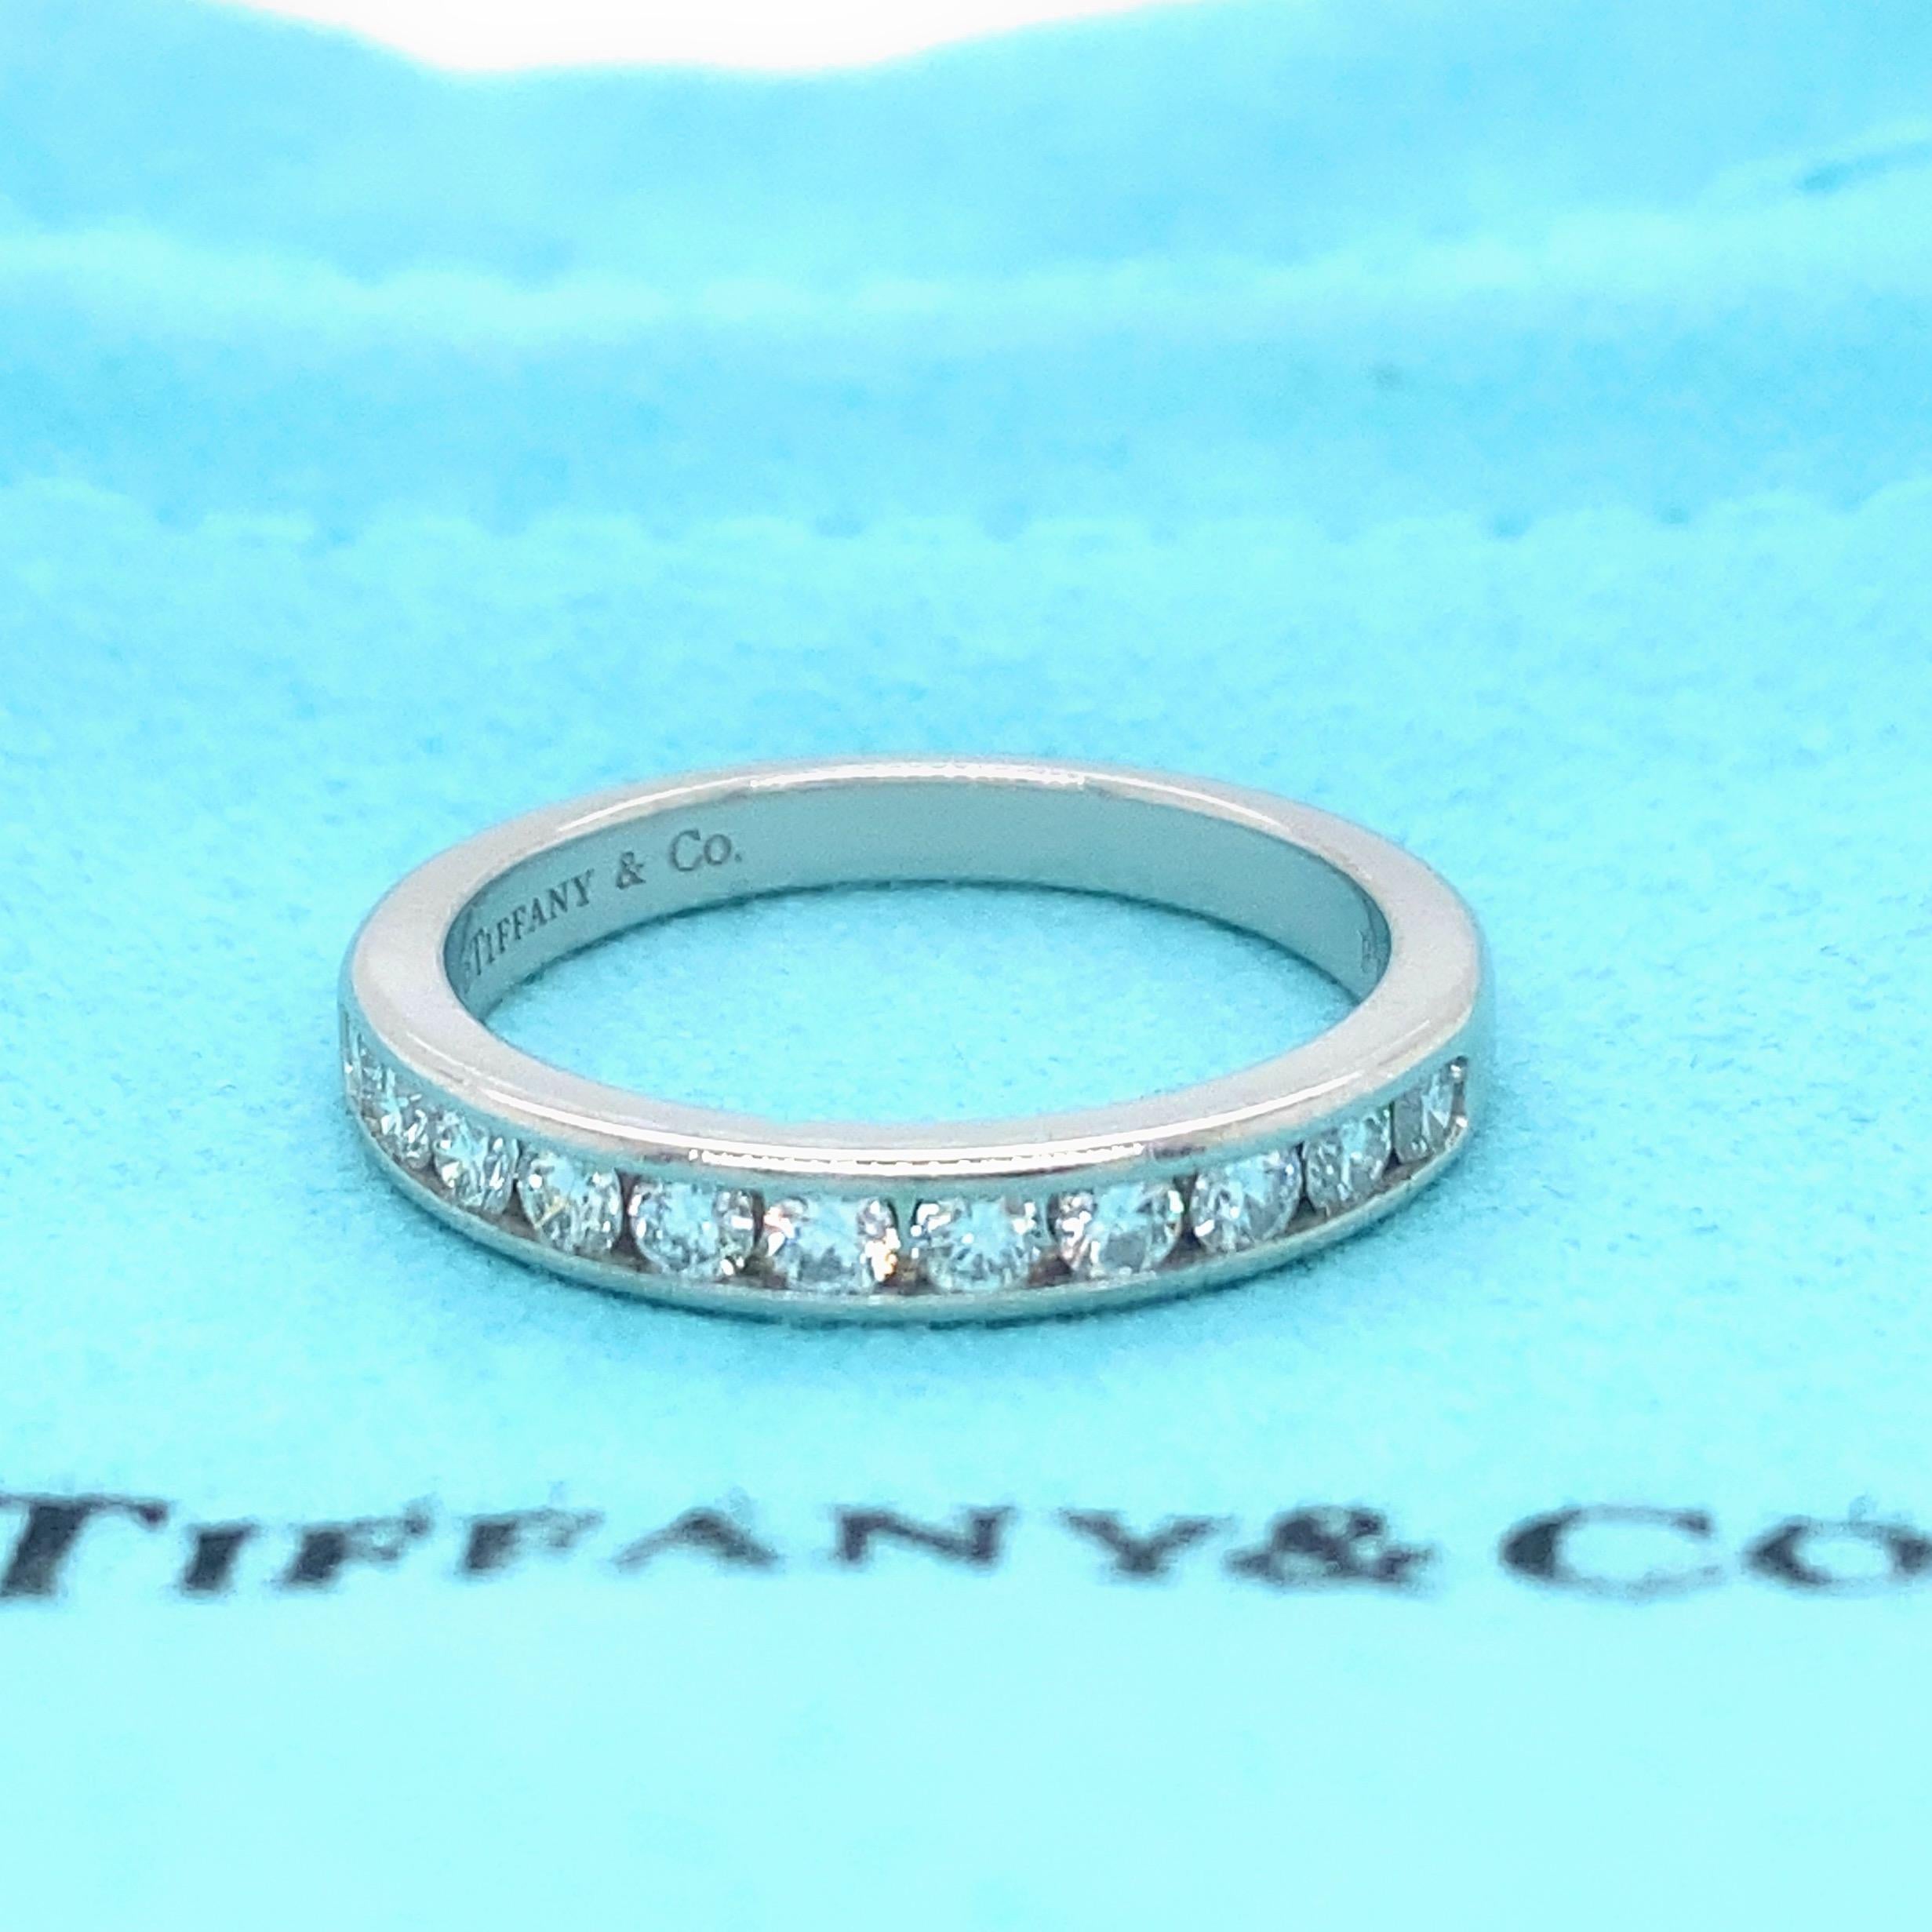 Tiffany & Co. Half-Circle Channel-Set Diamond Band
Style:  Channel-Set
Width:  3 MM
Metal:  Platinum PT950
Size:  5.75 sizable
TCW:  0.33 tcw
Main Diamond:  11 Round Brilliant Diamonds 
Color & Clarity:  F - G / VS - SI
Hallmark:  ©TIFFANY&CO.